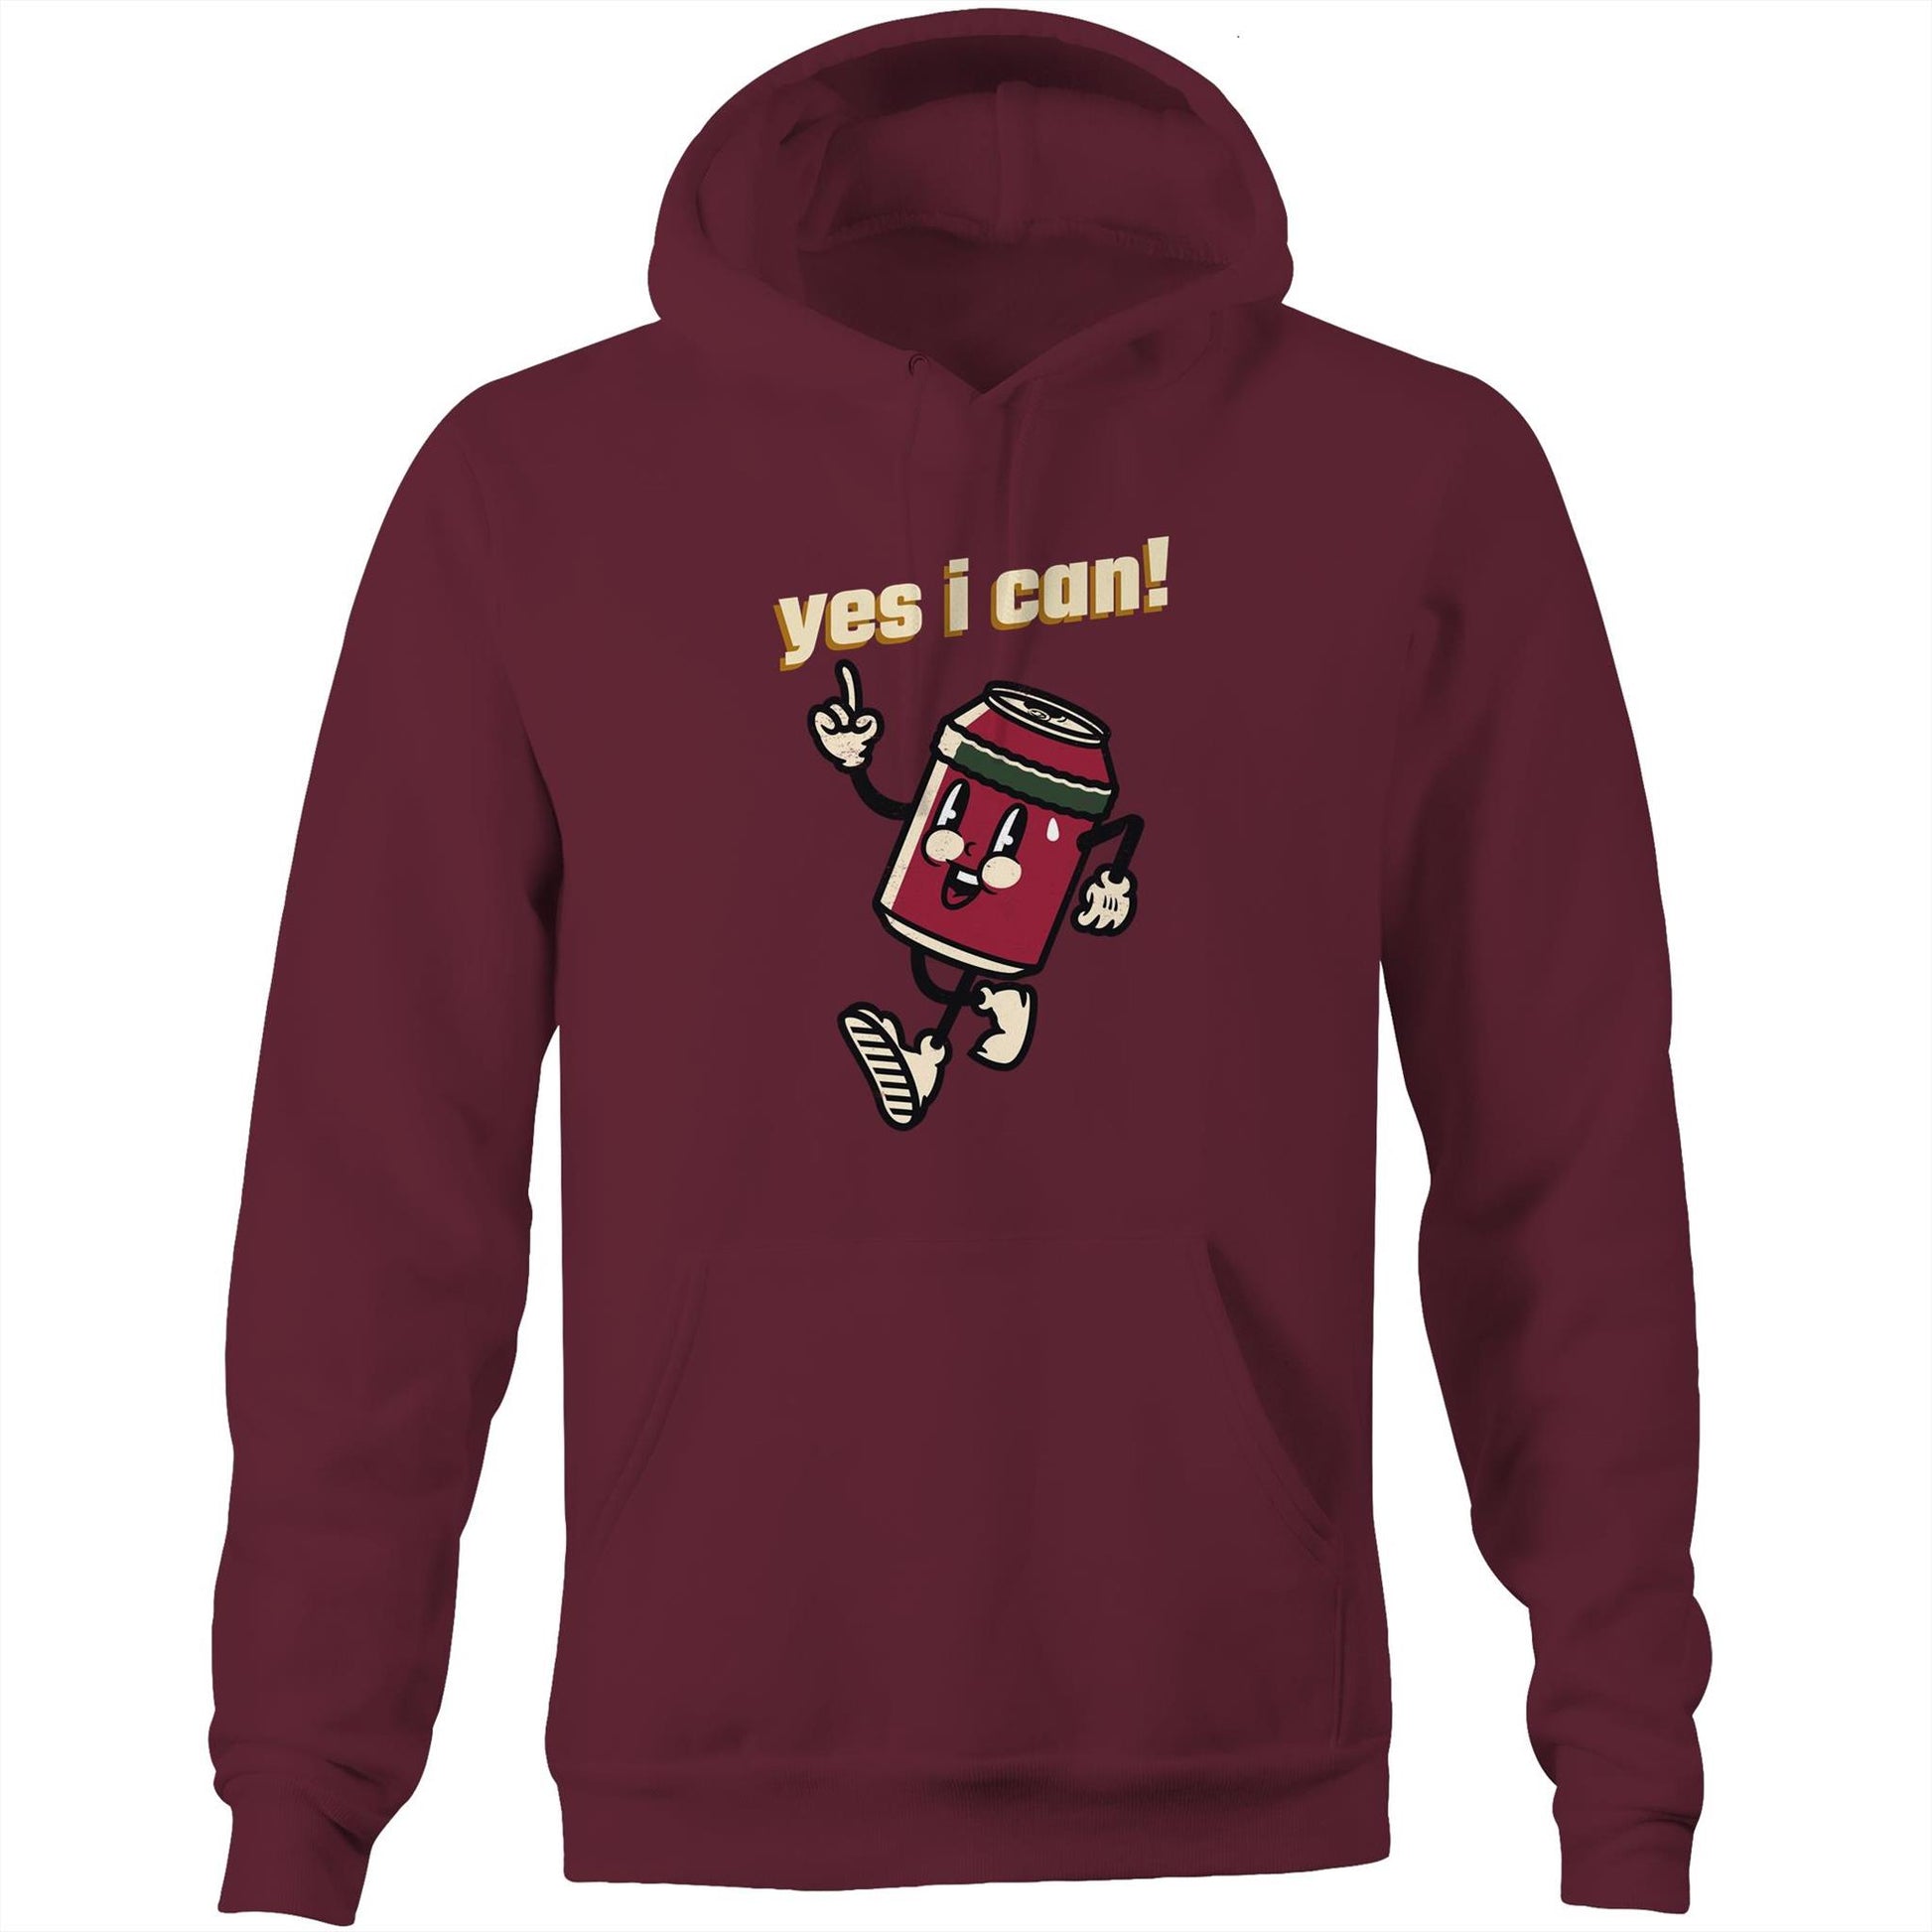 Yes I Can! - Pocket Hoodie Sweatshirt Burgundy Hoodie Motivation Retro